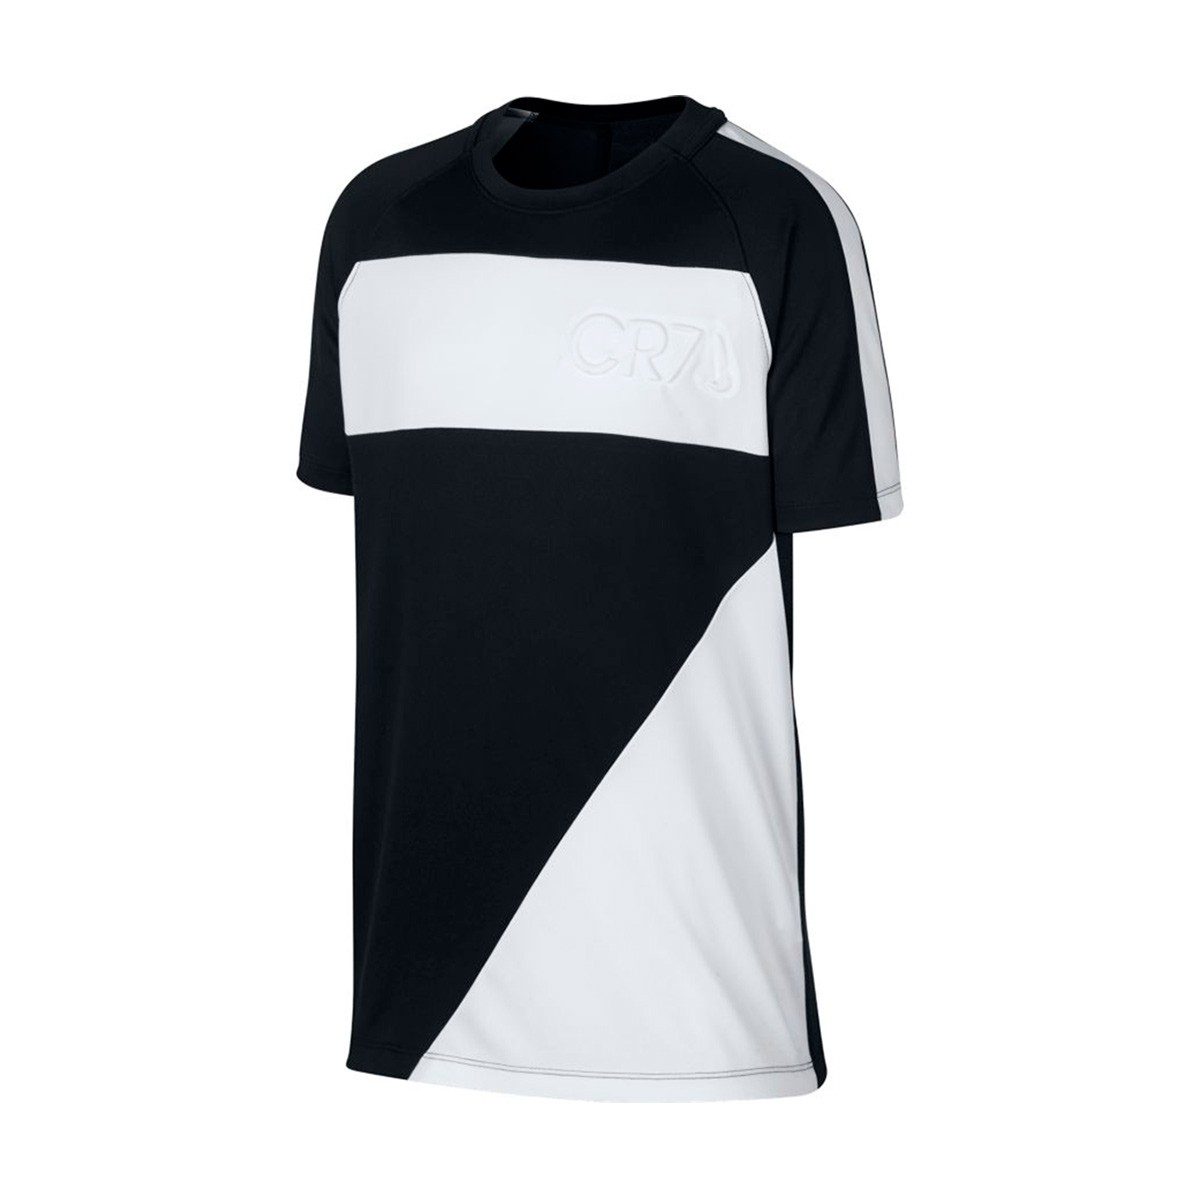 Camiseta Nike Dry CR7 Niño Black-White - Tienda de fútbol Fútbol Emotion